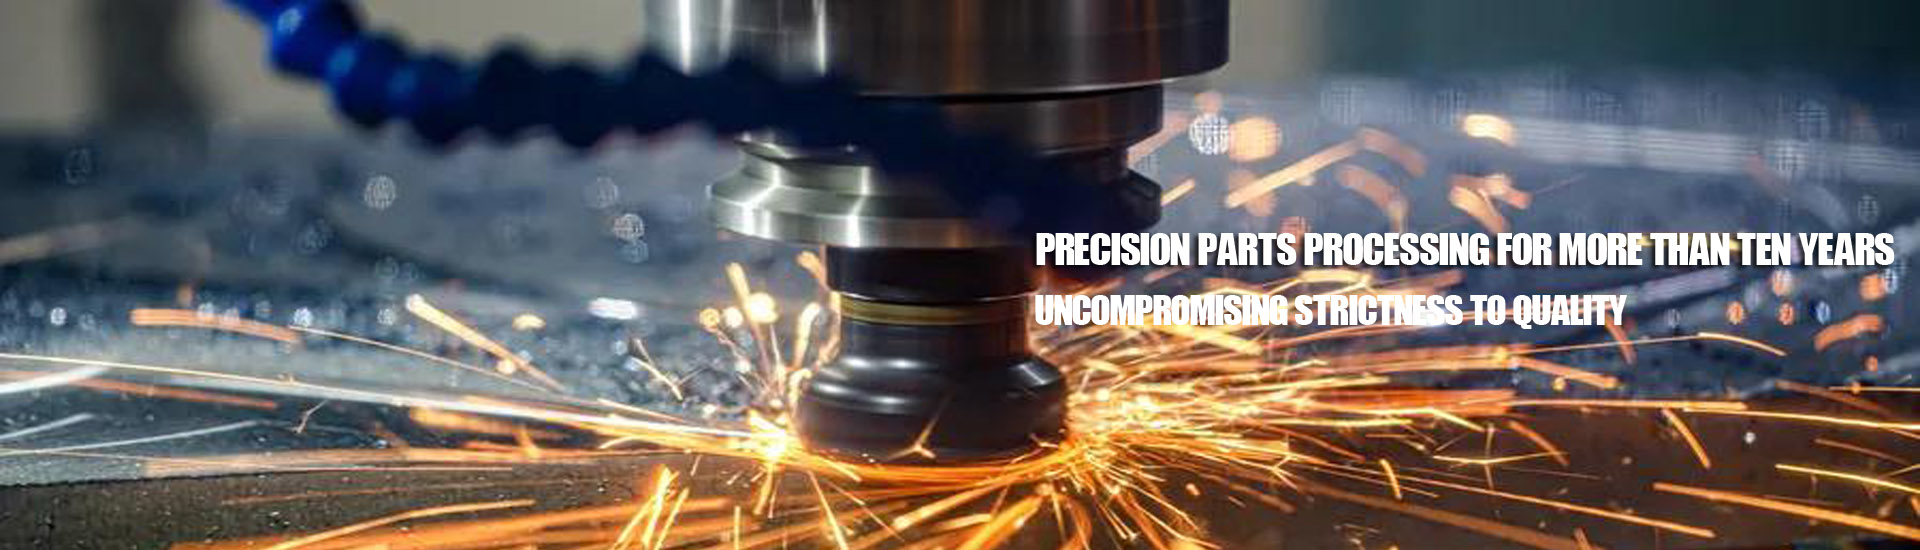 Dongguan Baiteng Precision Machinery Co., Ltd.,-CNC precision parts processing - precision mechanical parts processing - CNC machining stainless steel copper and aluminum accessories